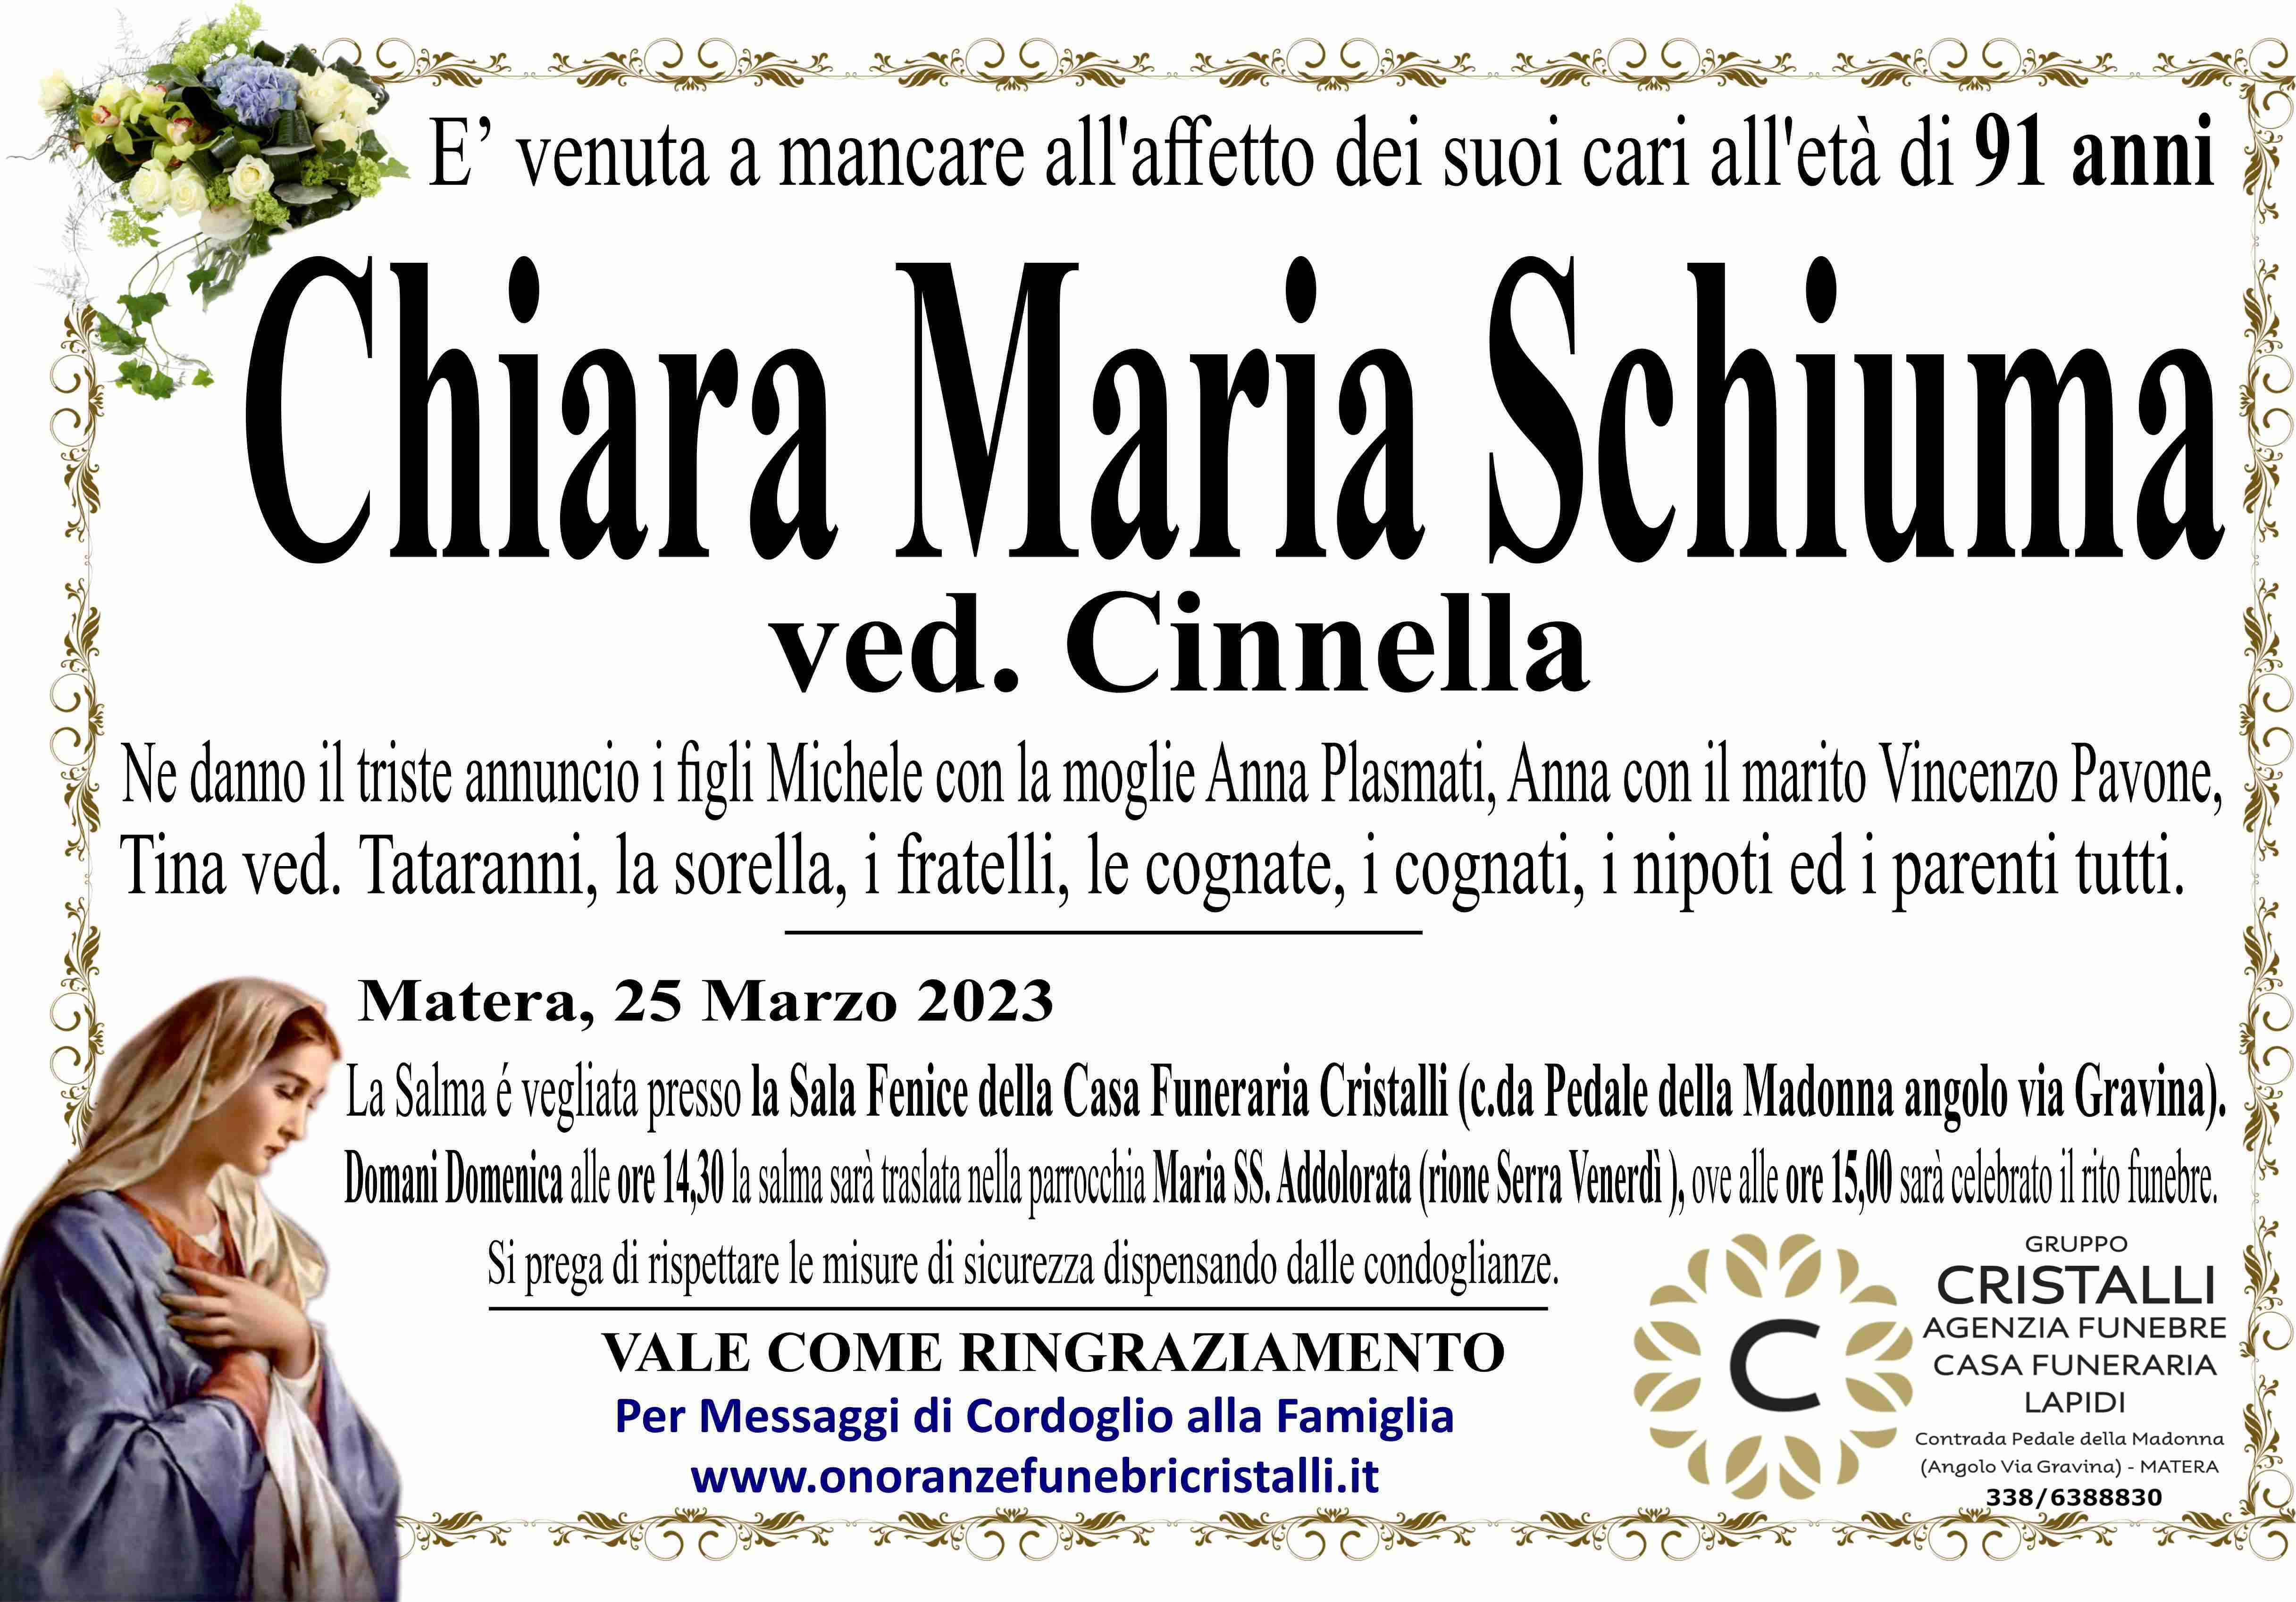 Chiara Maria Schiuma